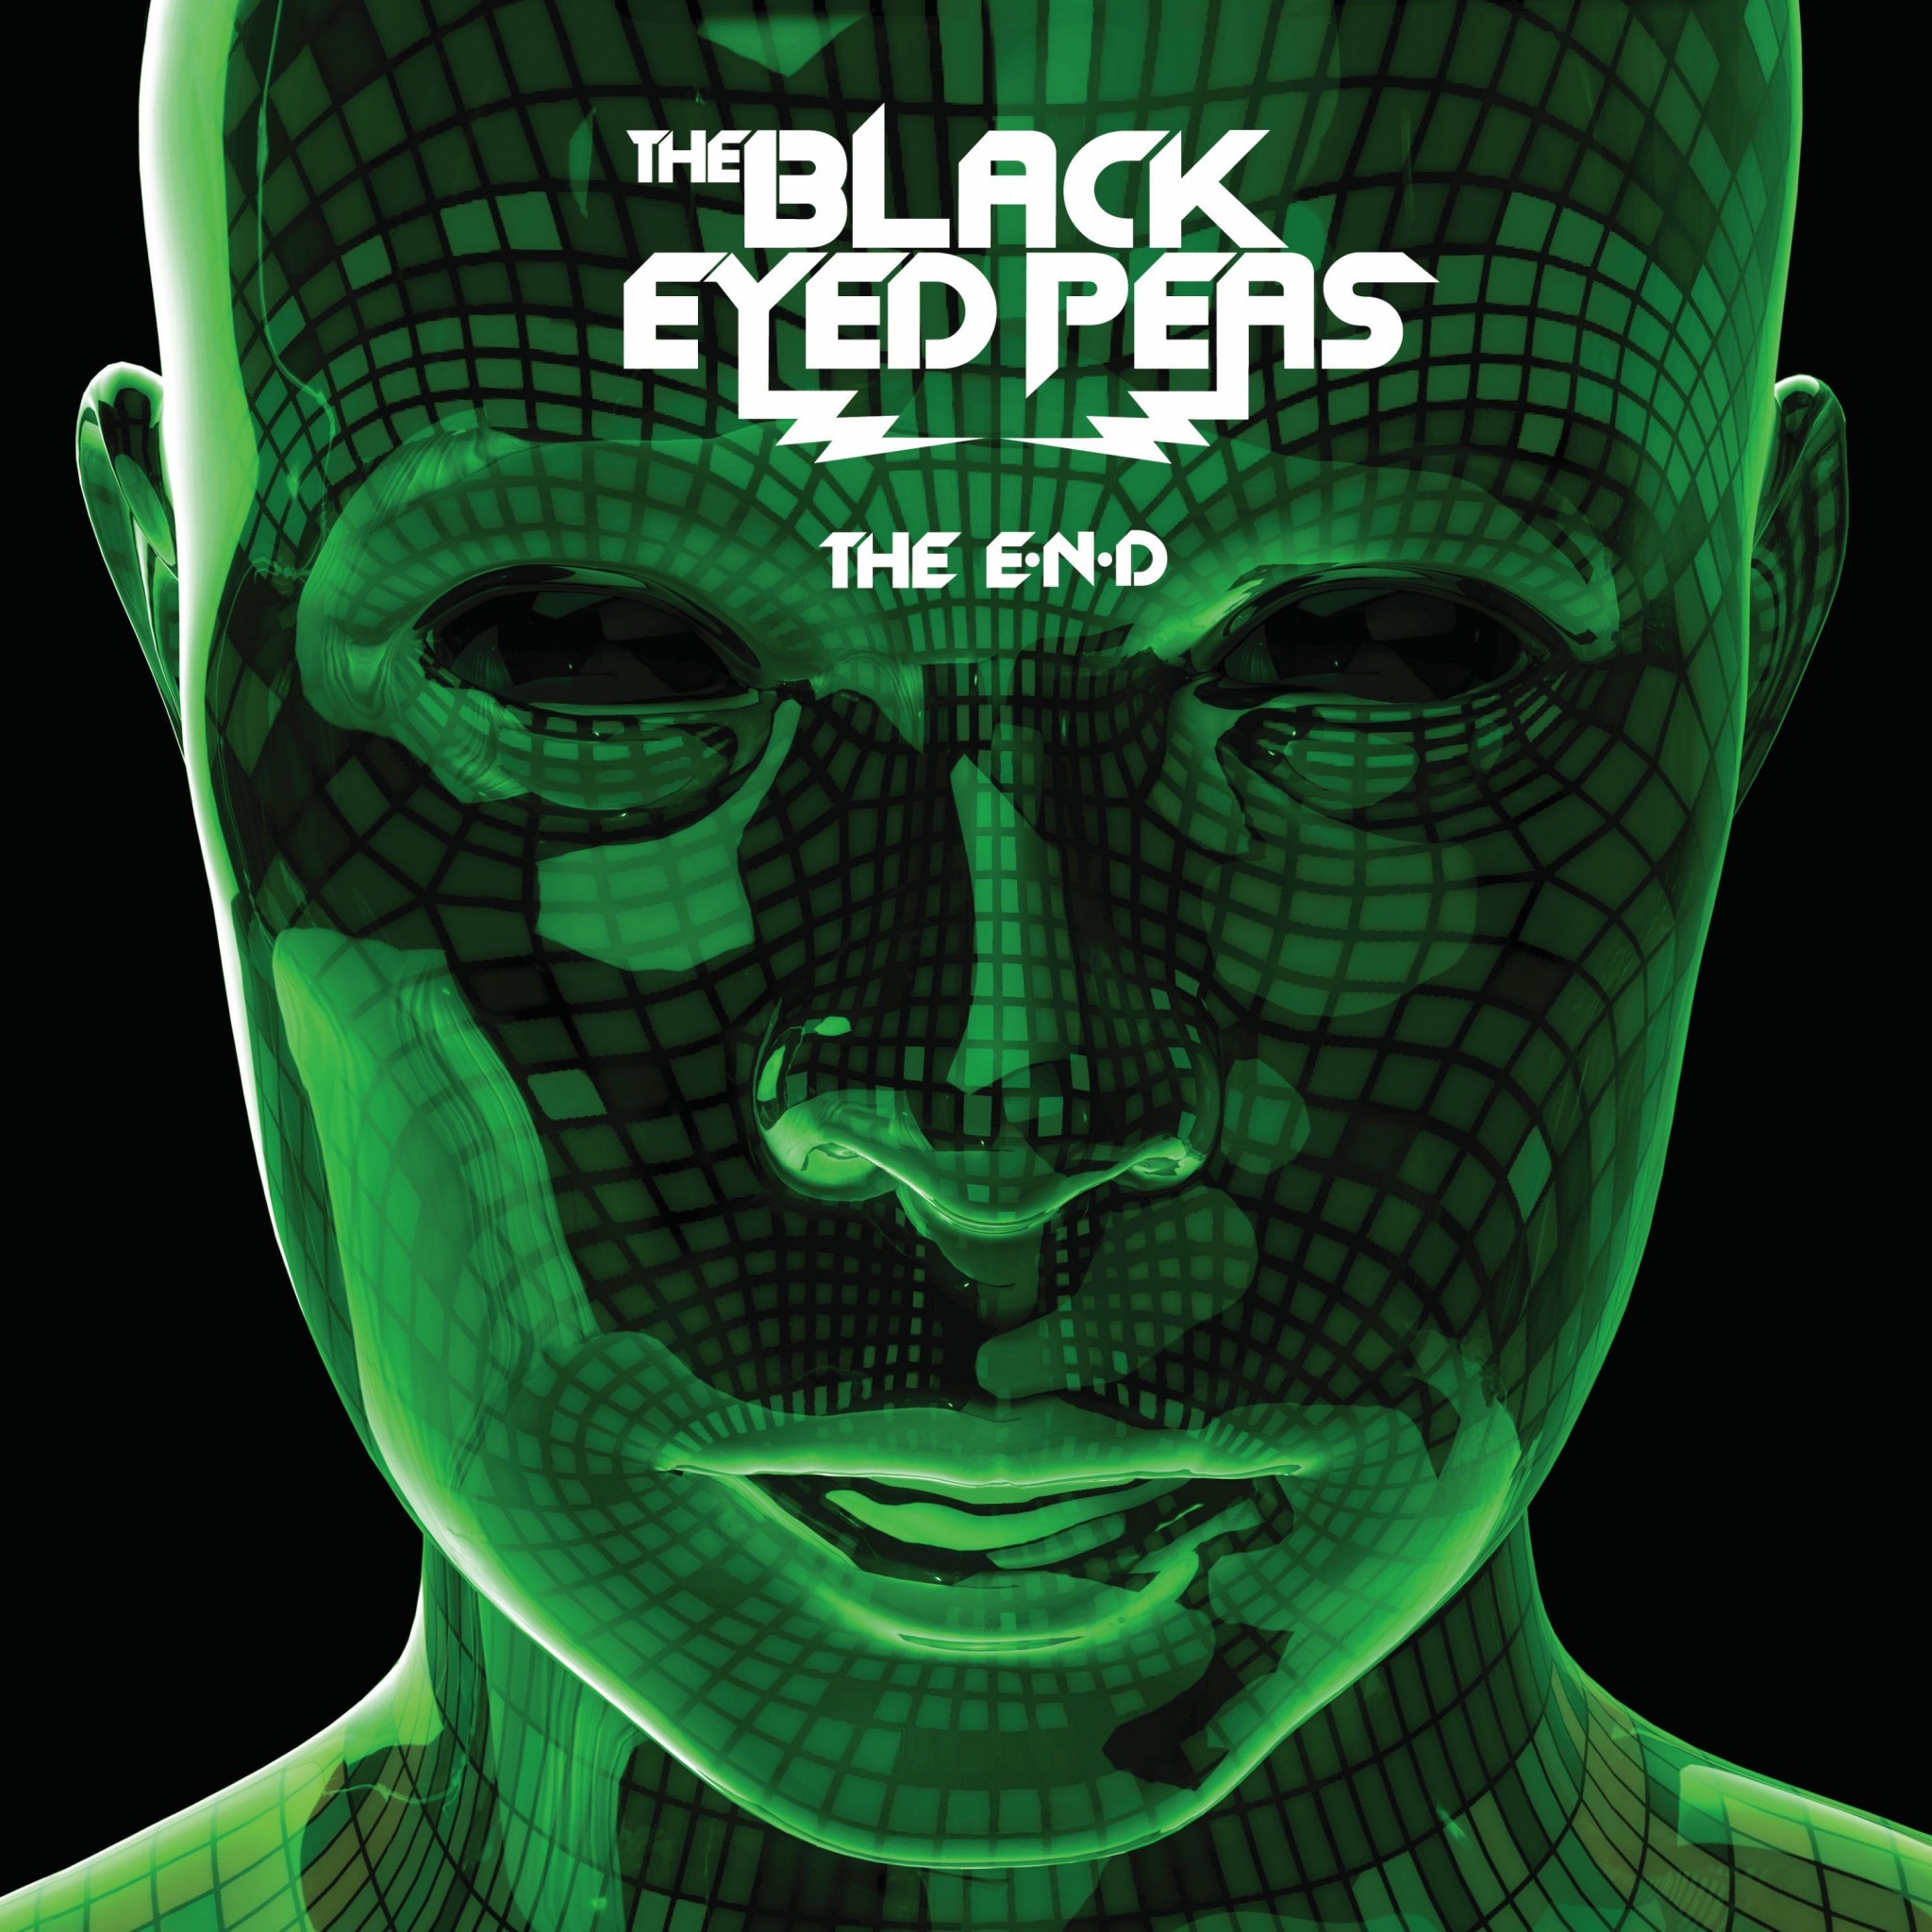 THE BLACK EYED PEAS – „The E.N.D.”